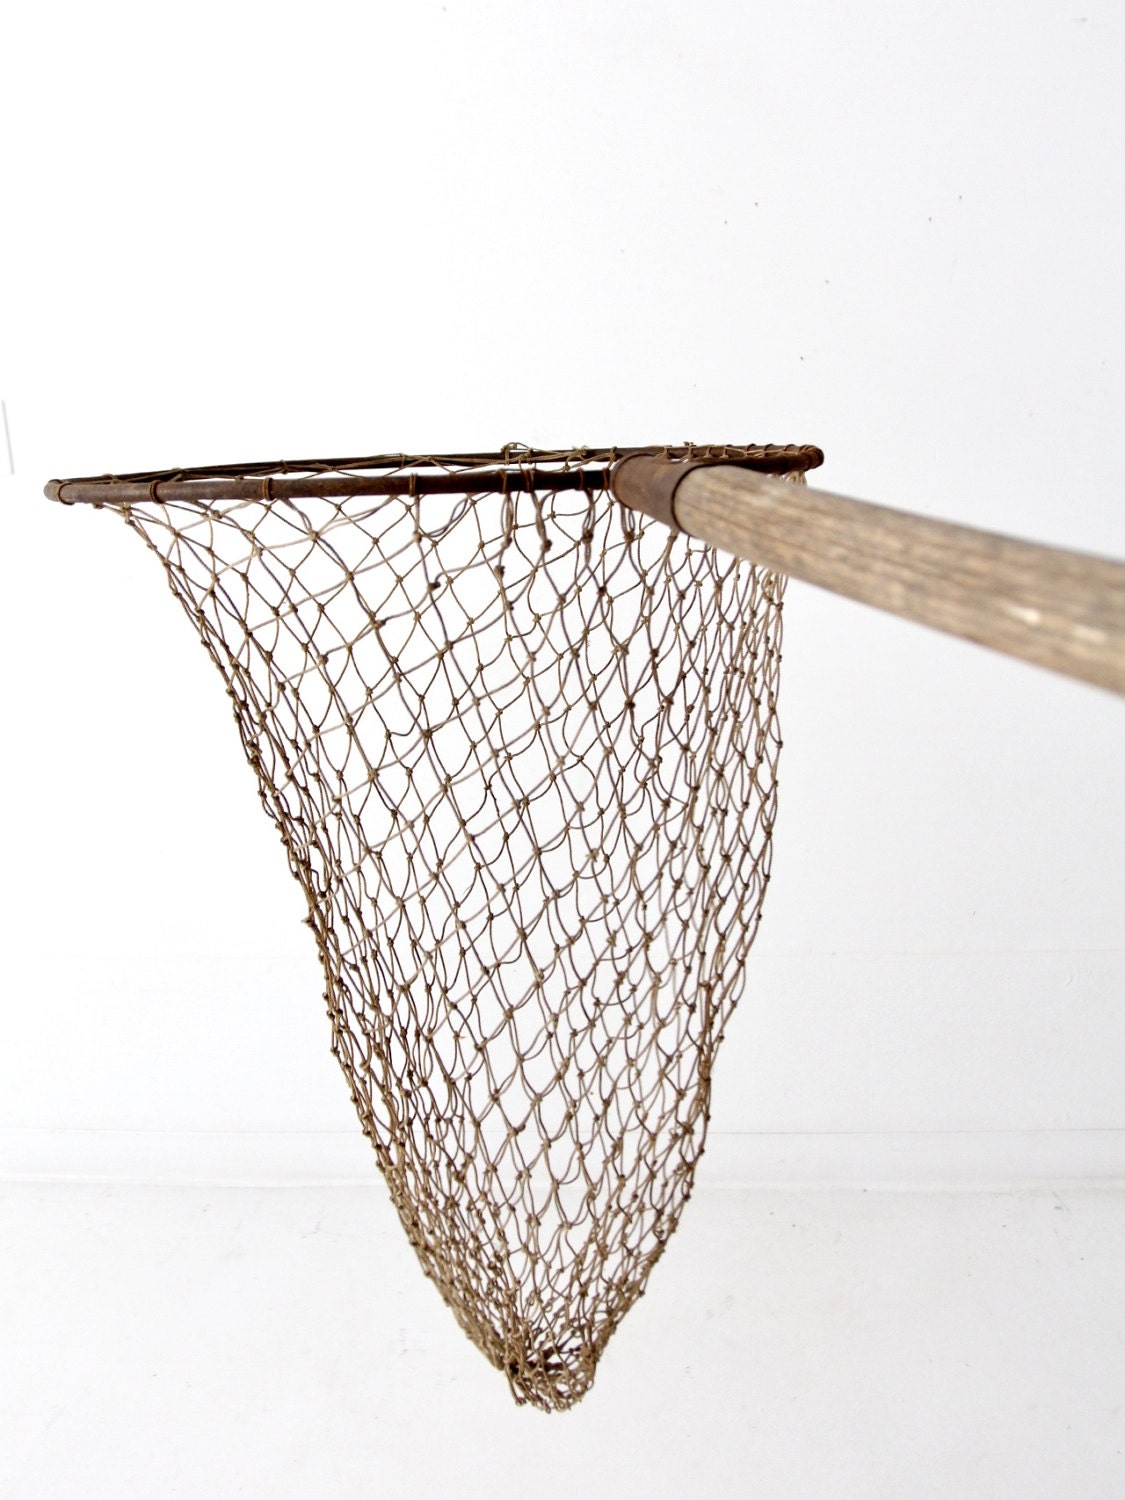 Antique Fish Net on Pole, Large Hand Held Fishing Net 